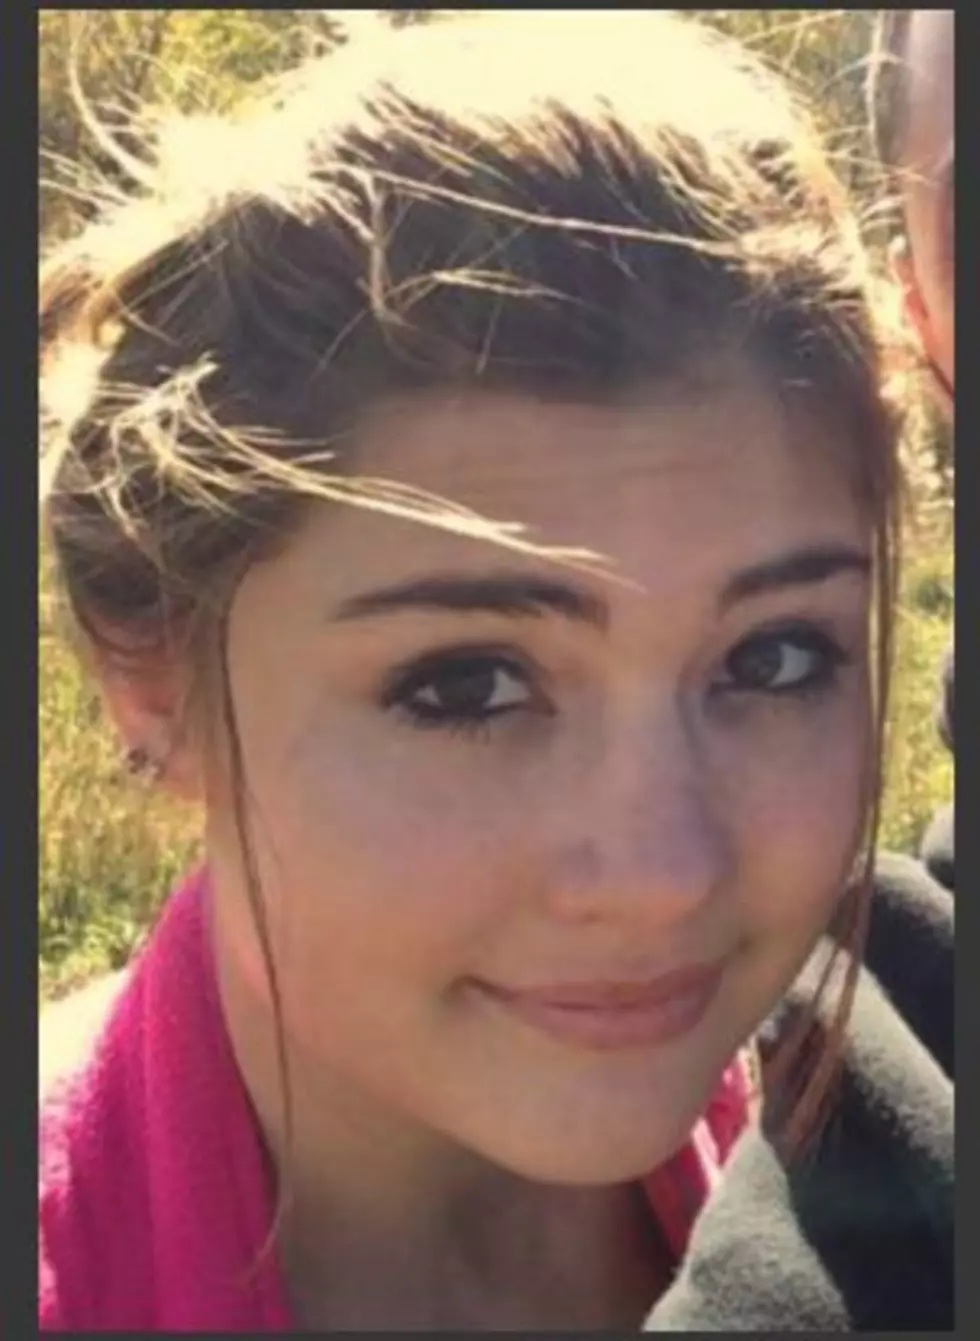 Help us locate Madilyne Bishop, missing teen from Denison, IA